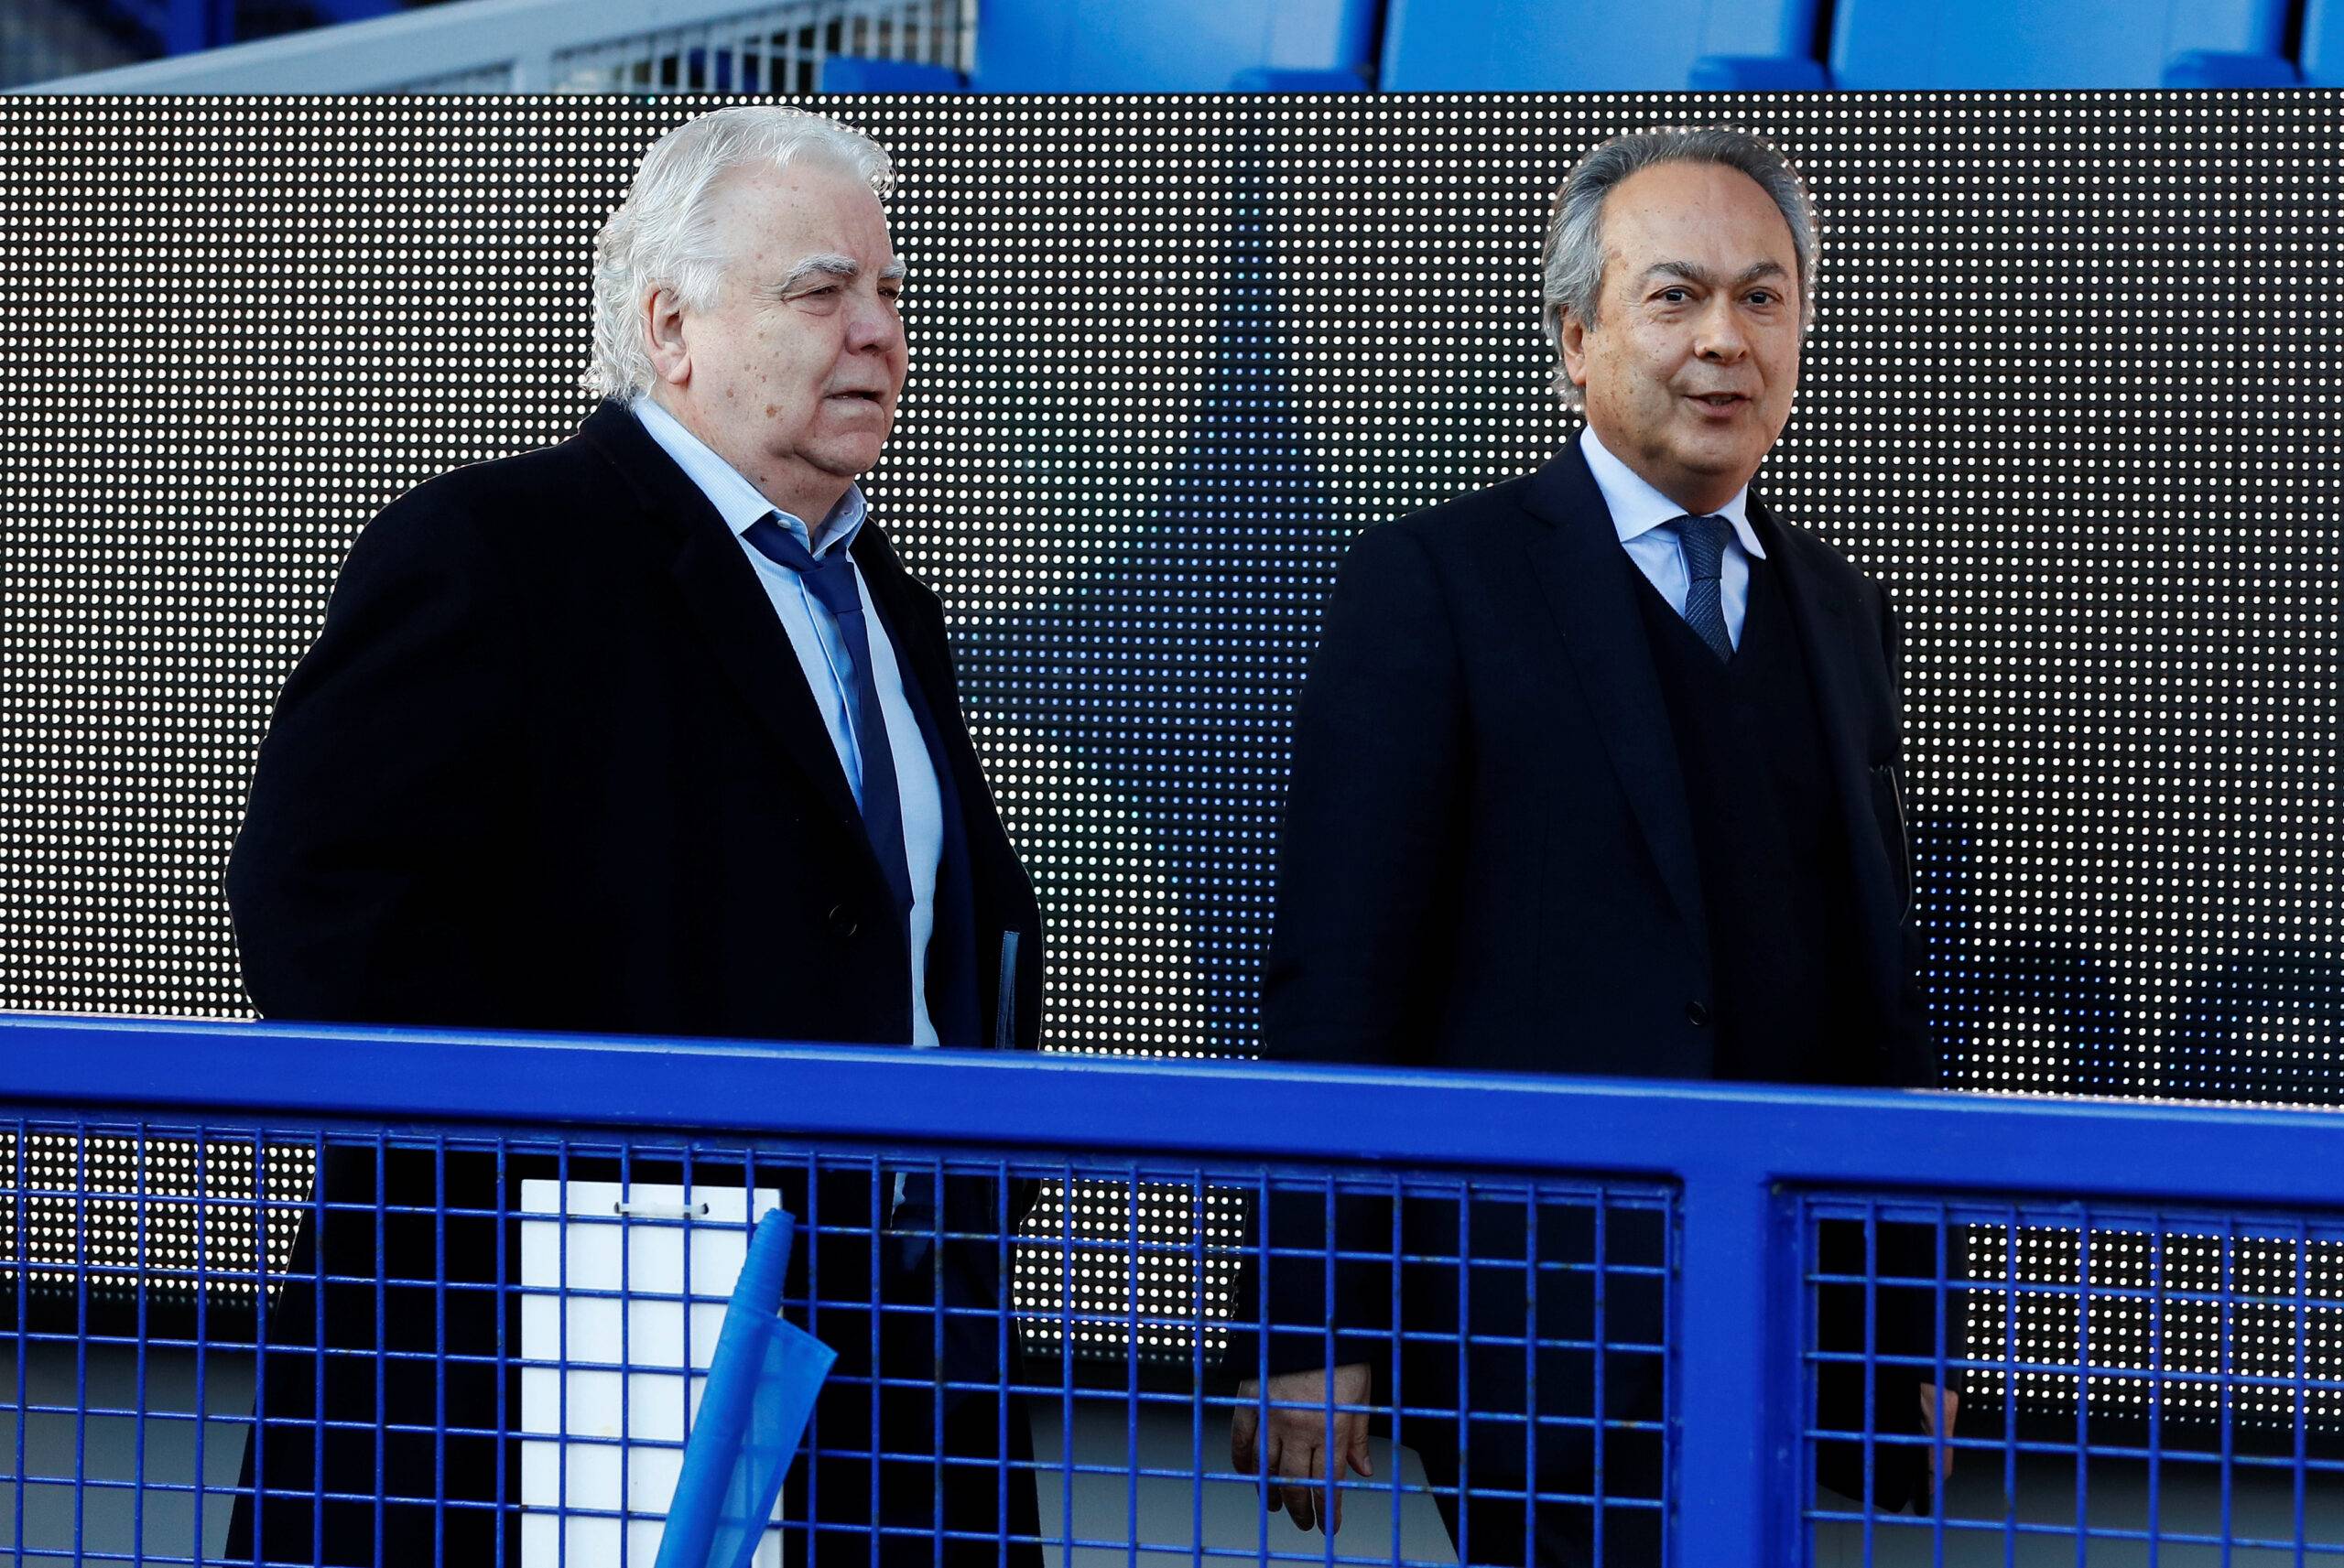 Everton owner Farhad Moshiri walking alongside Bill Kenwright